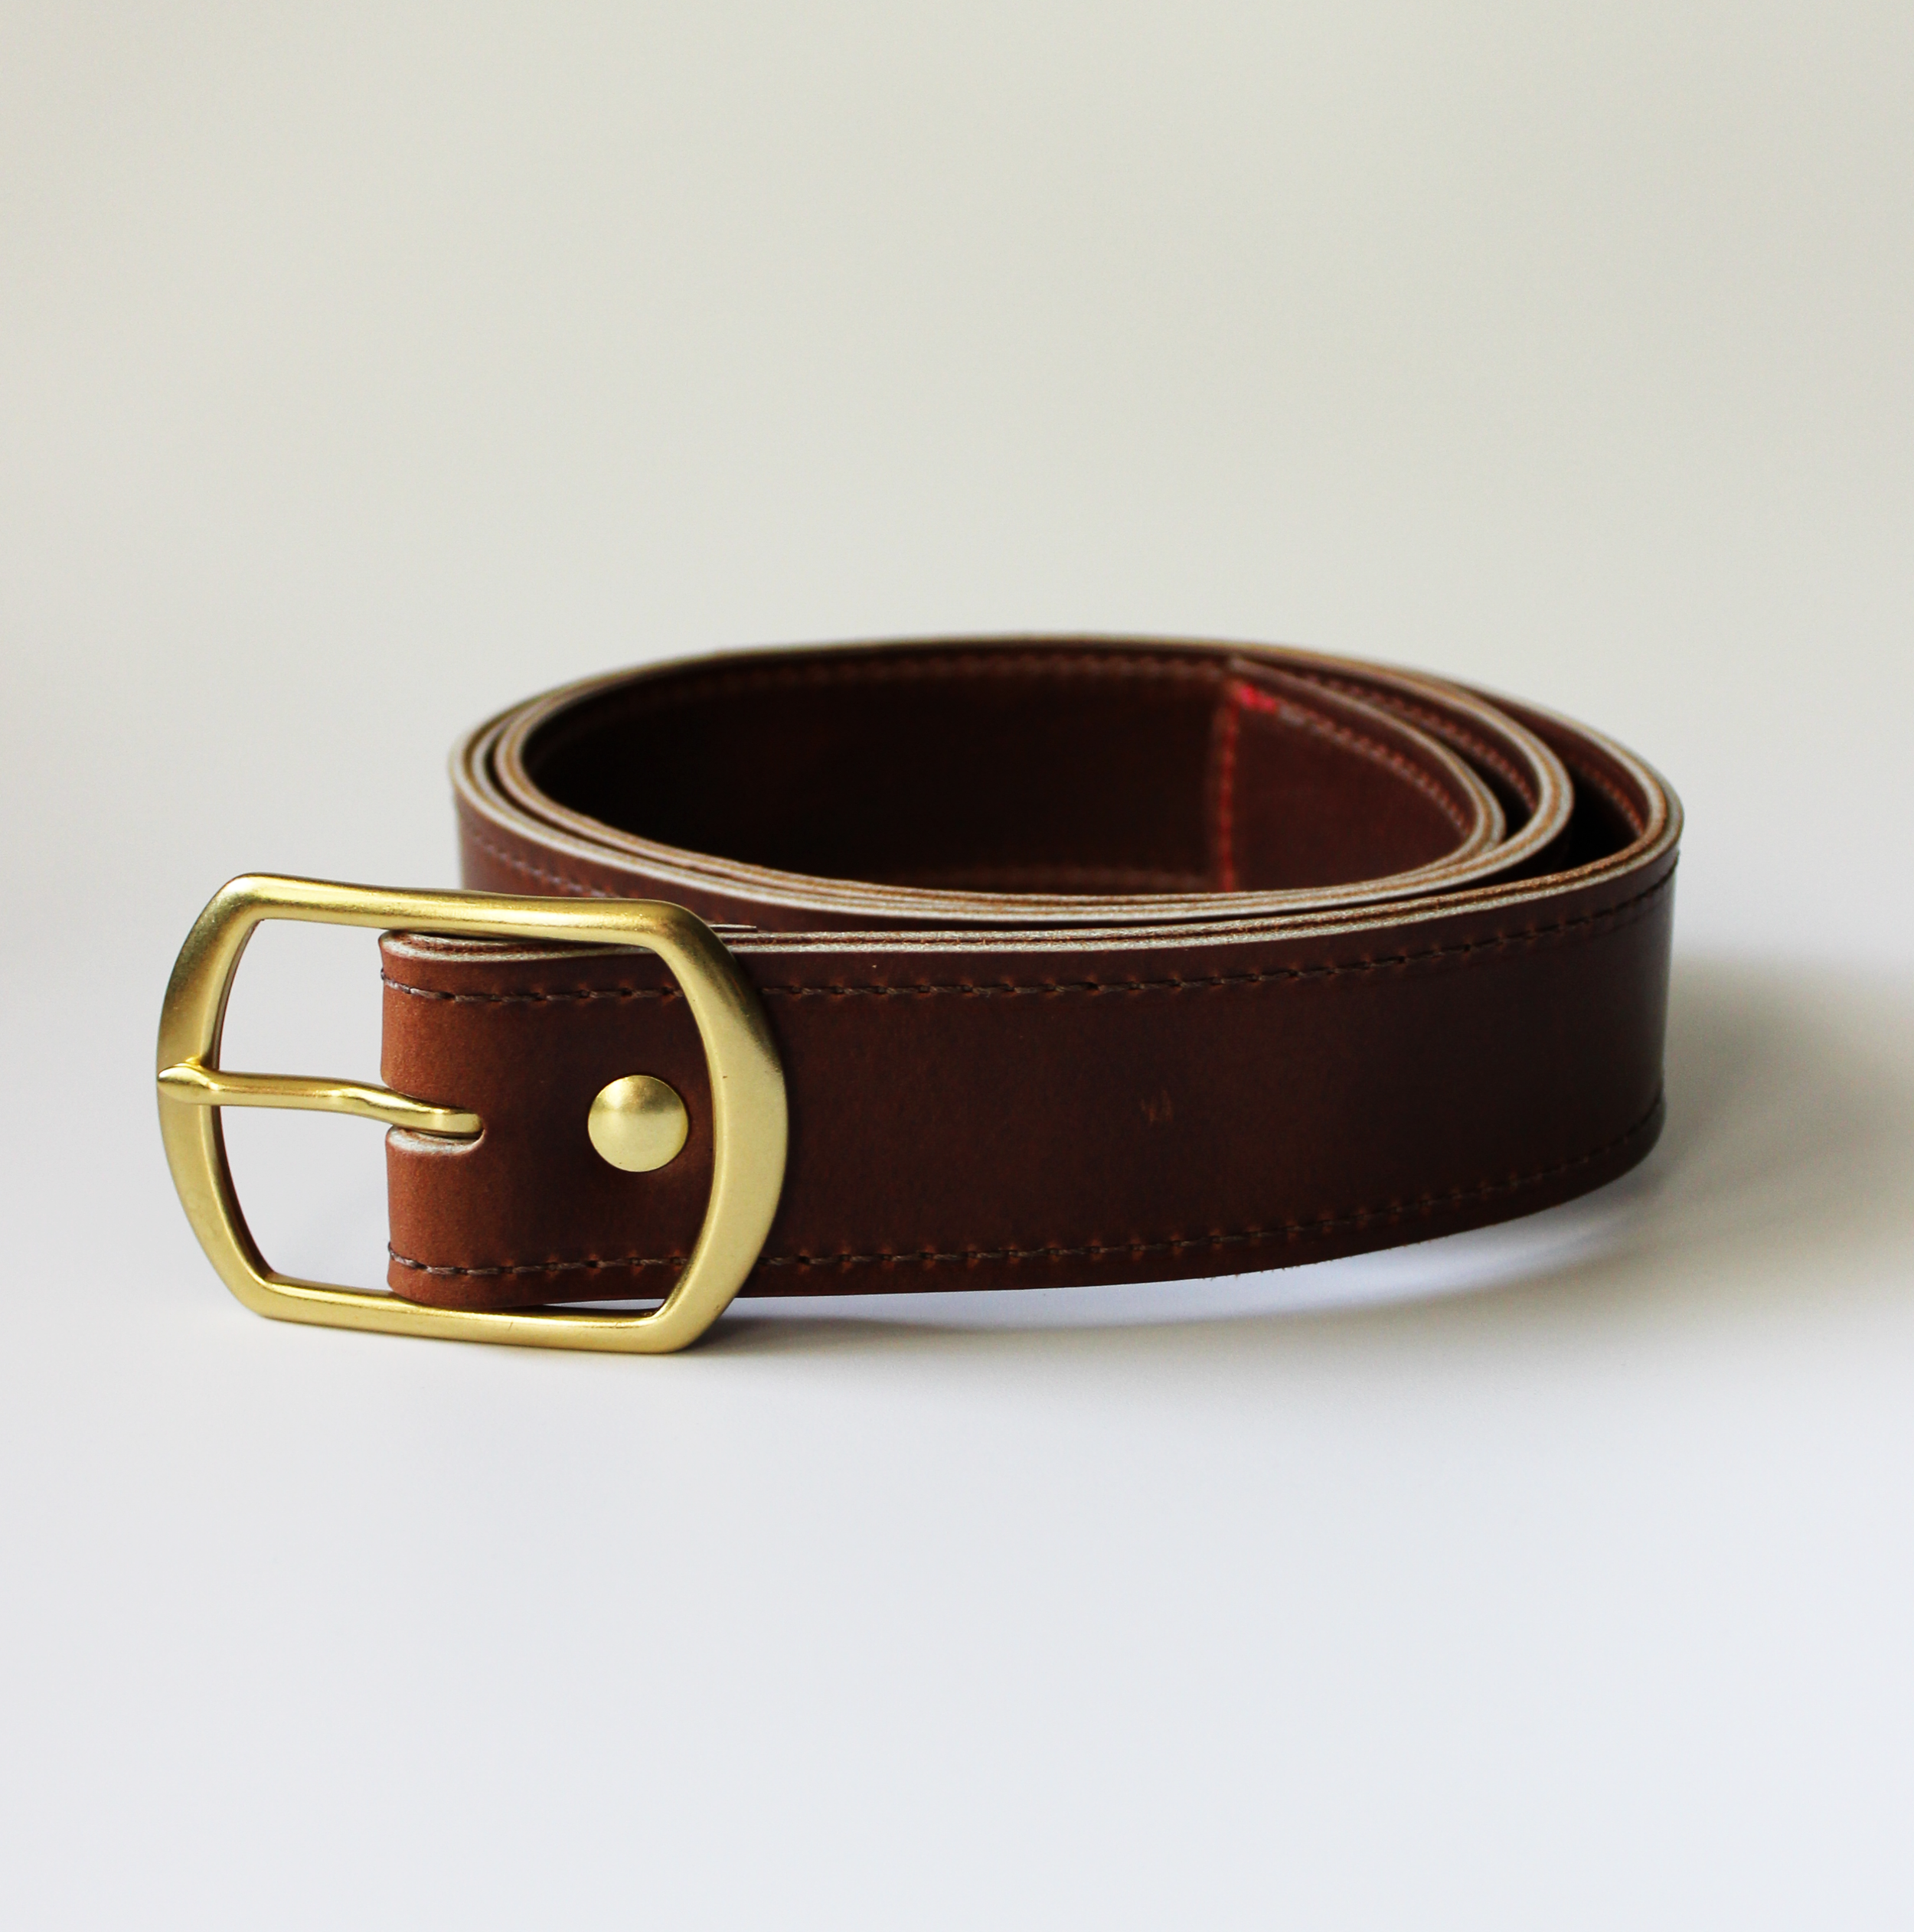 NH Leather Belt – $126